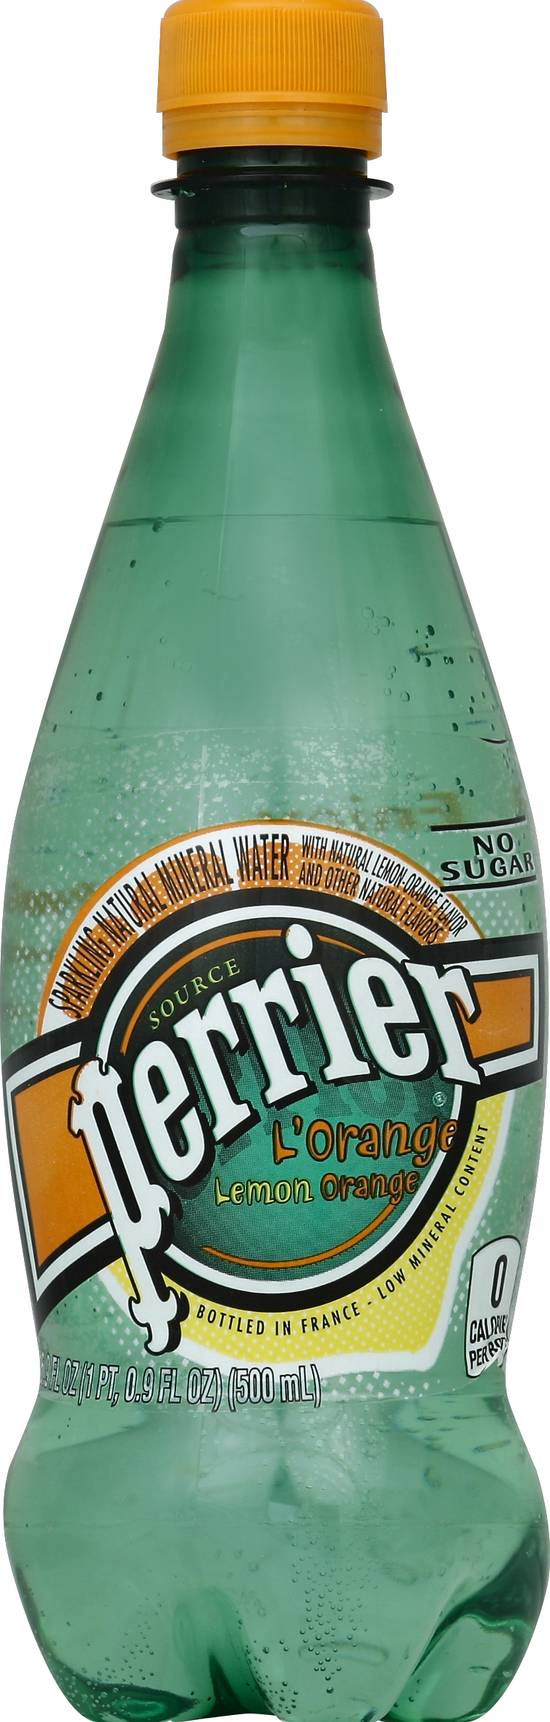 Perrier L'orange Flavored Carbonated Mineral Water (16.9 fl oz)